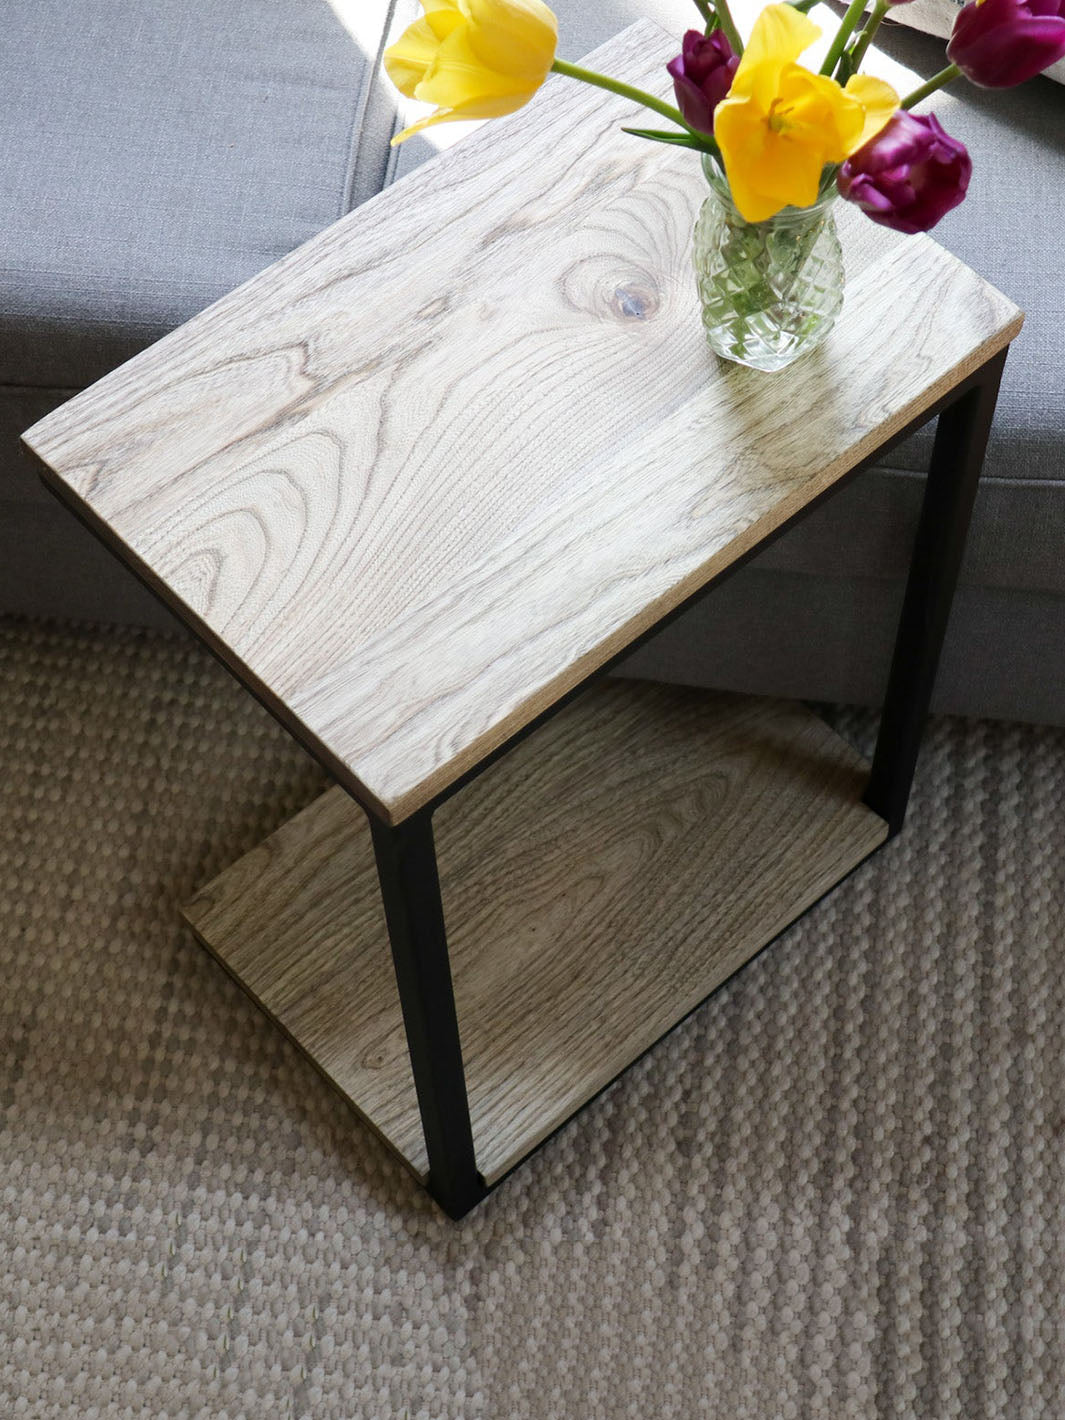 Hackberry Floor Shelf Modern C Side Table Earthly Comfort Side Tables 1646-8